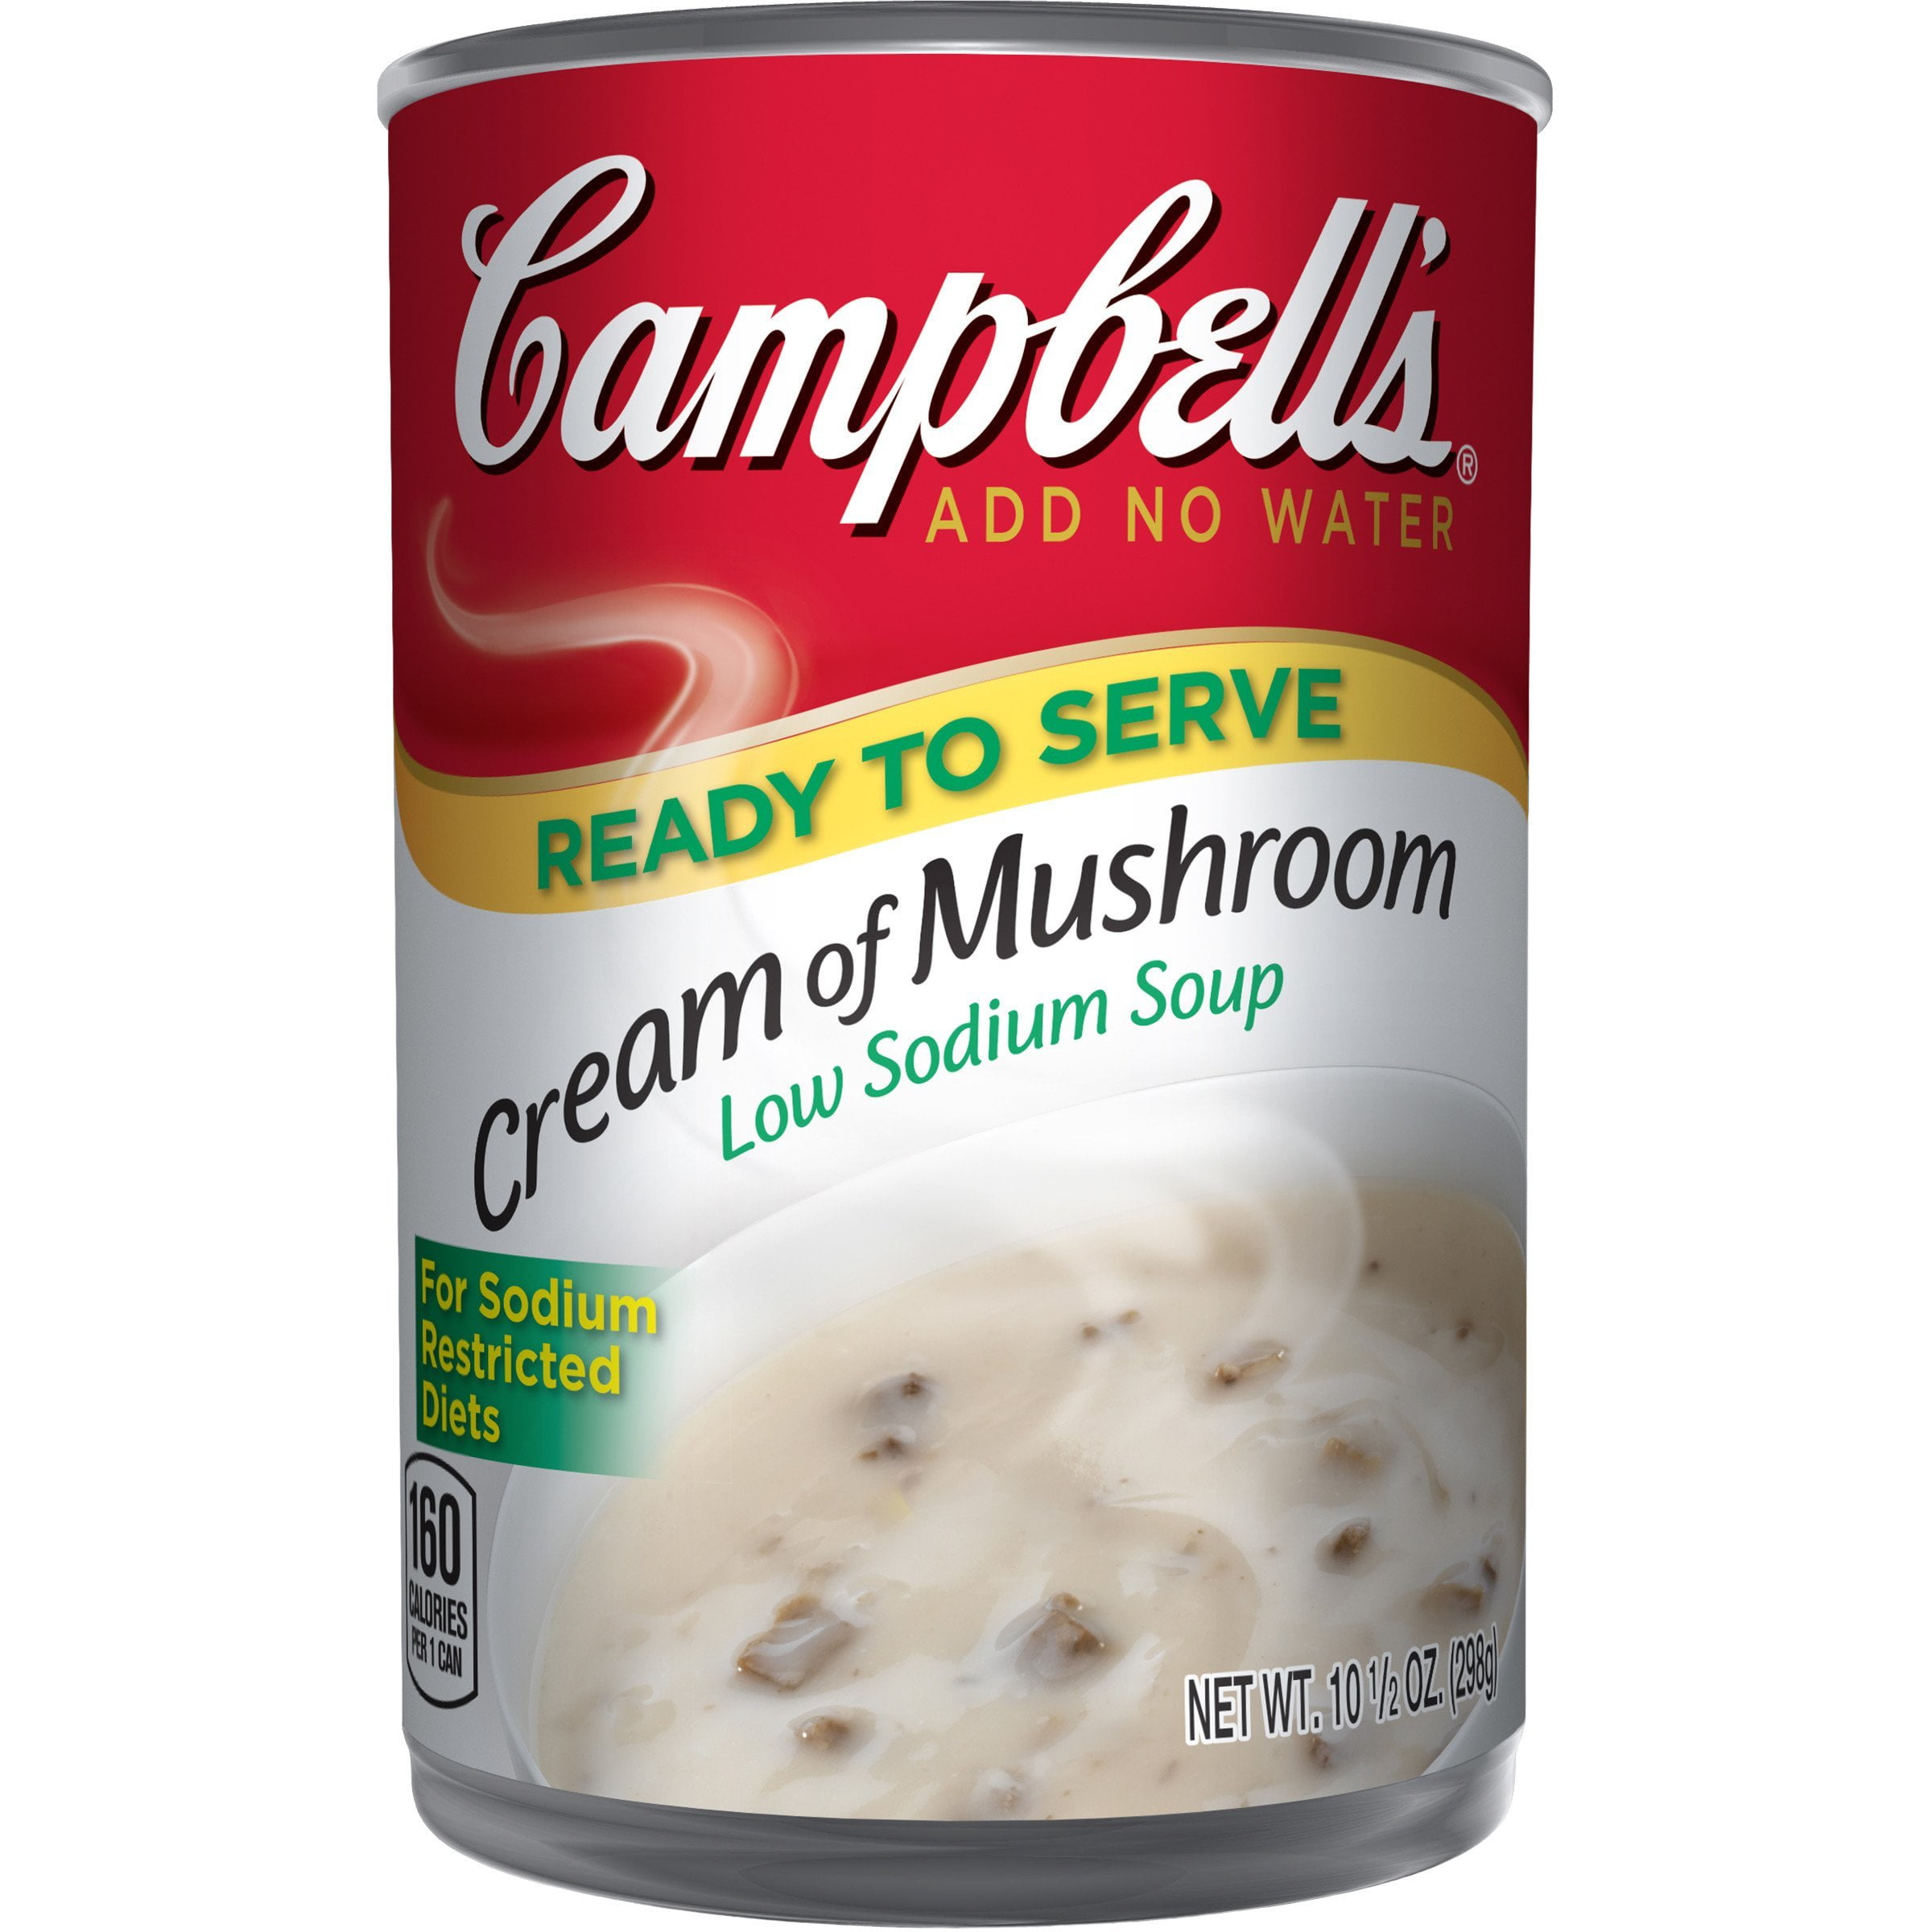 campbell cream of mushroom soup